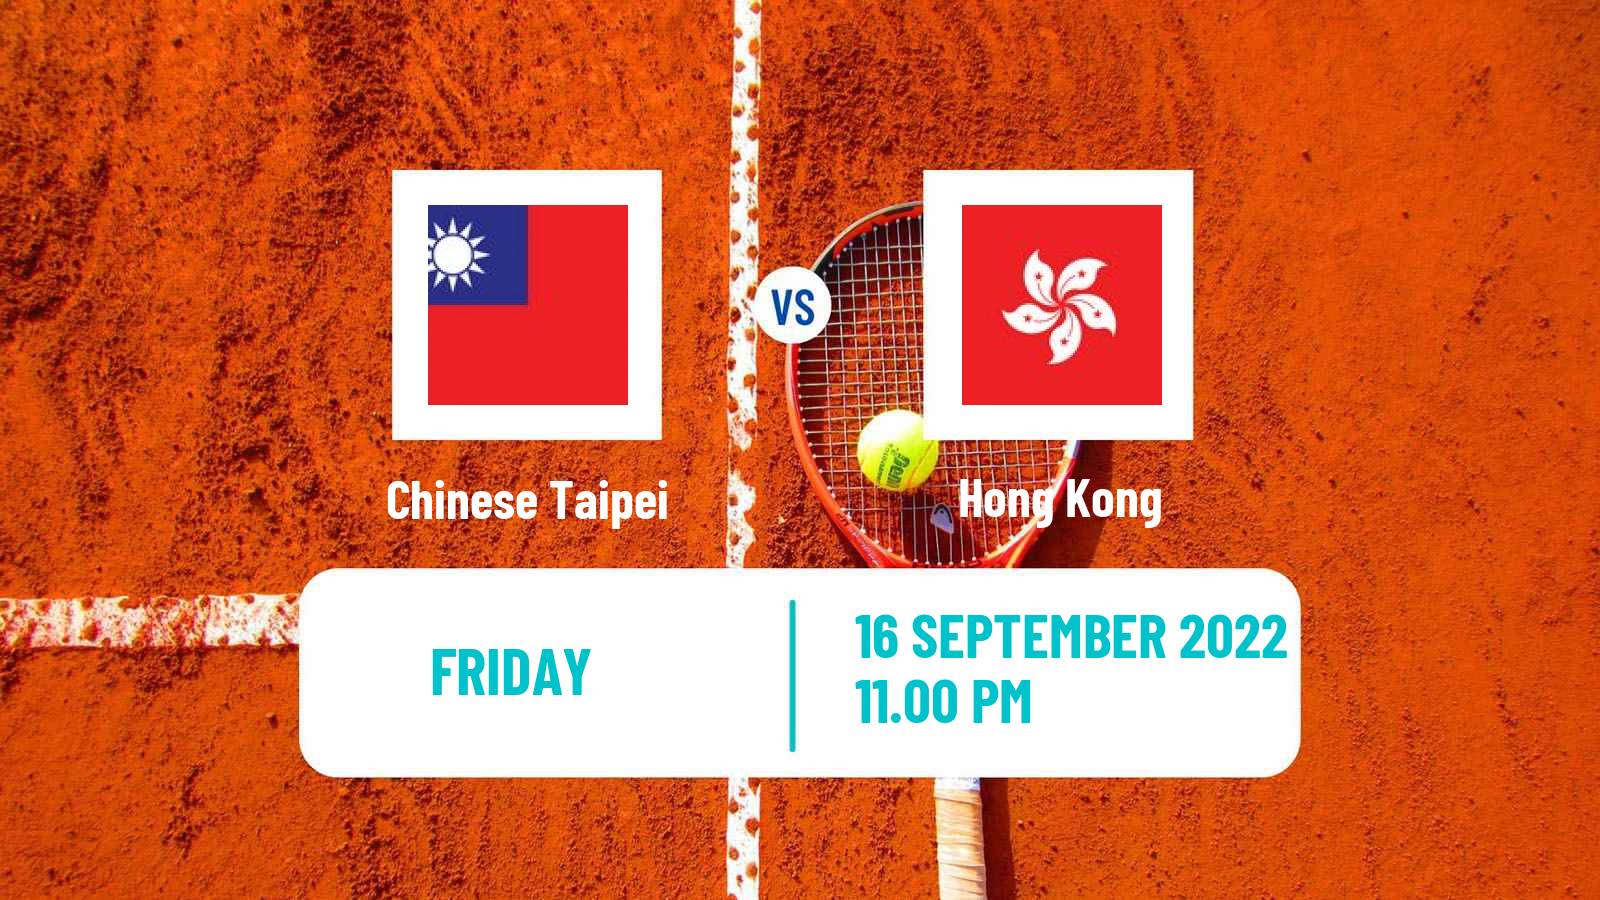 Tennis Davis Cup World Group II Teams Chinese Taipei - Hong Kong